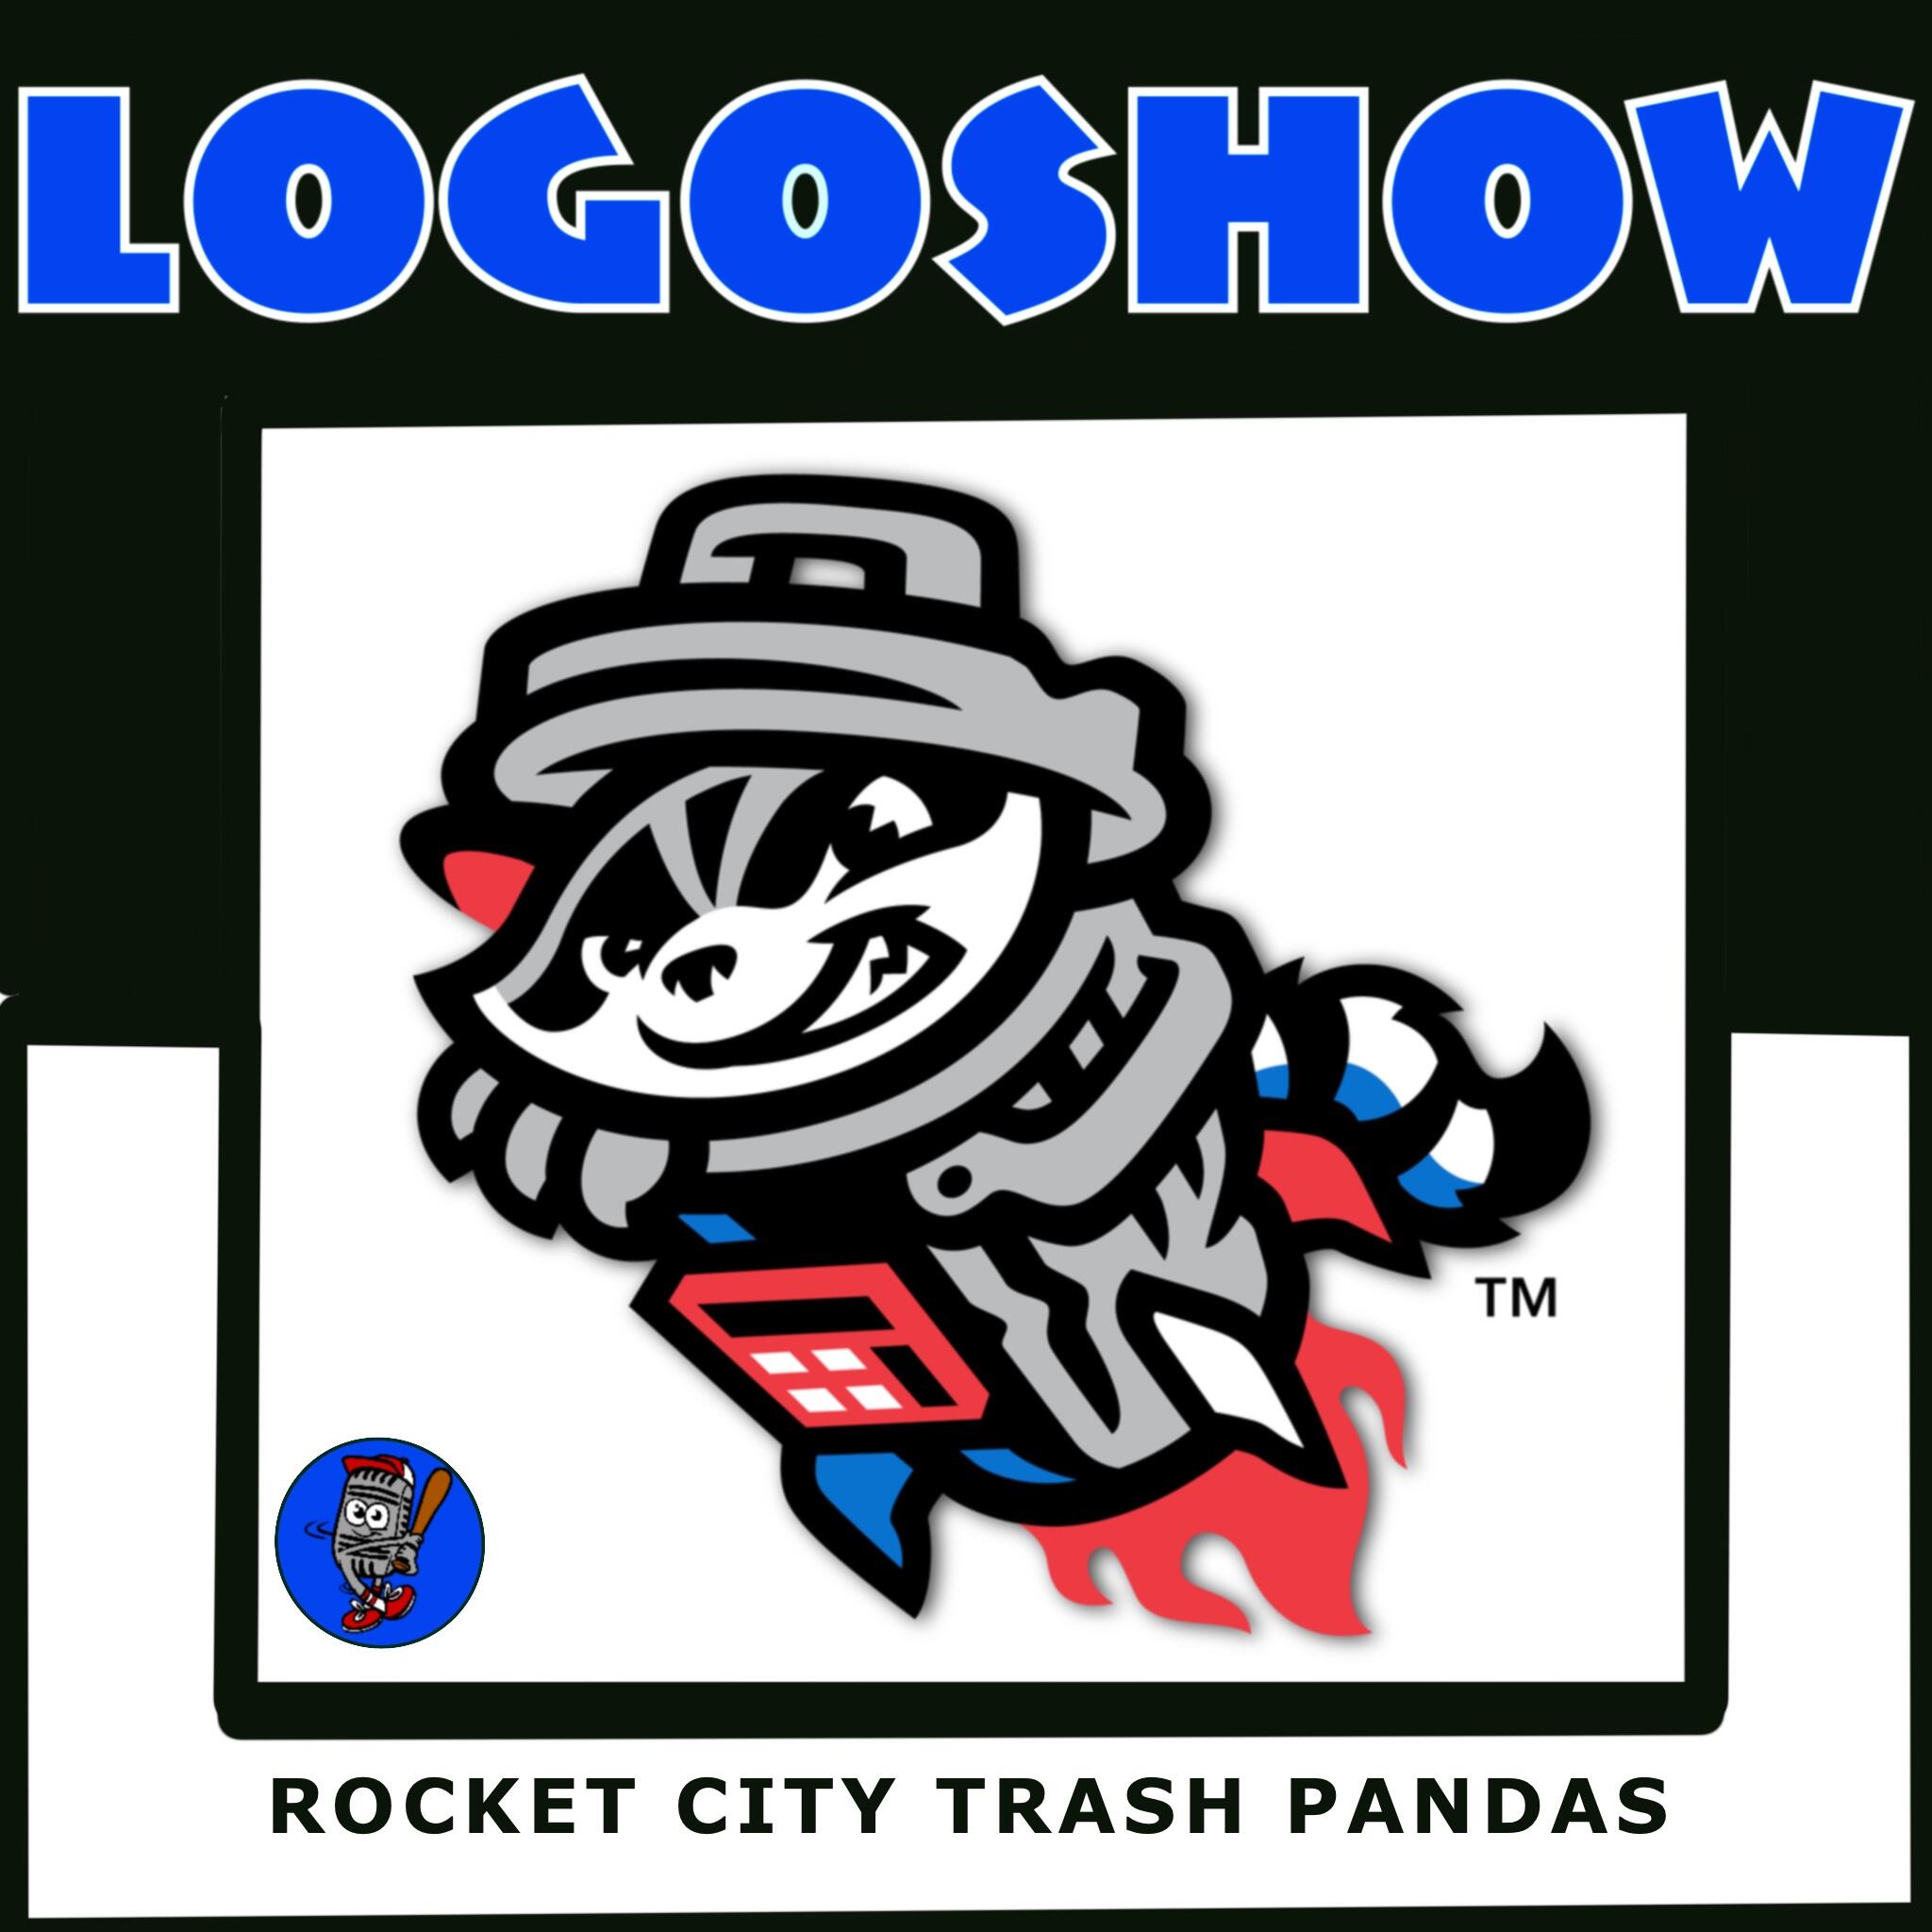 Rocket City Trash Pandas show off new baseball logos 